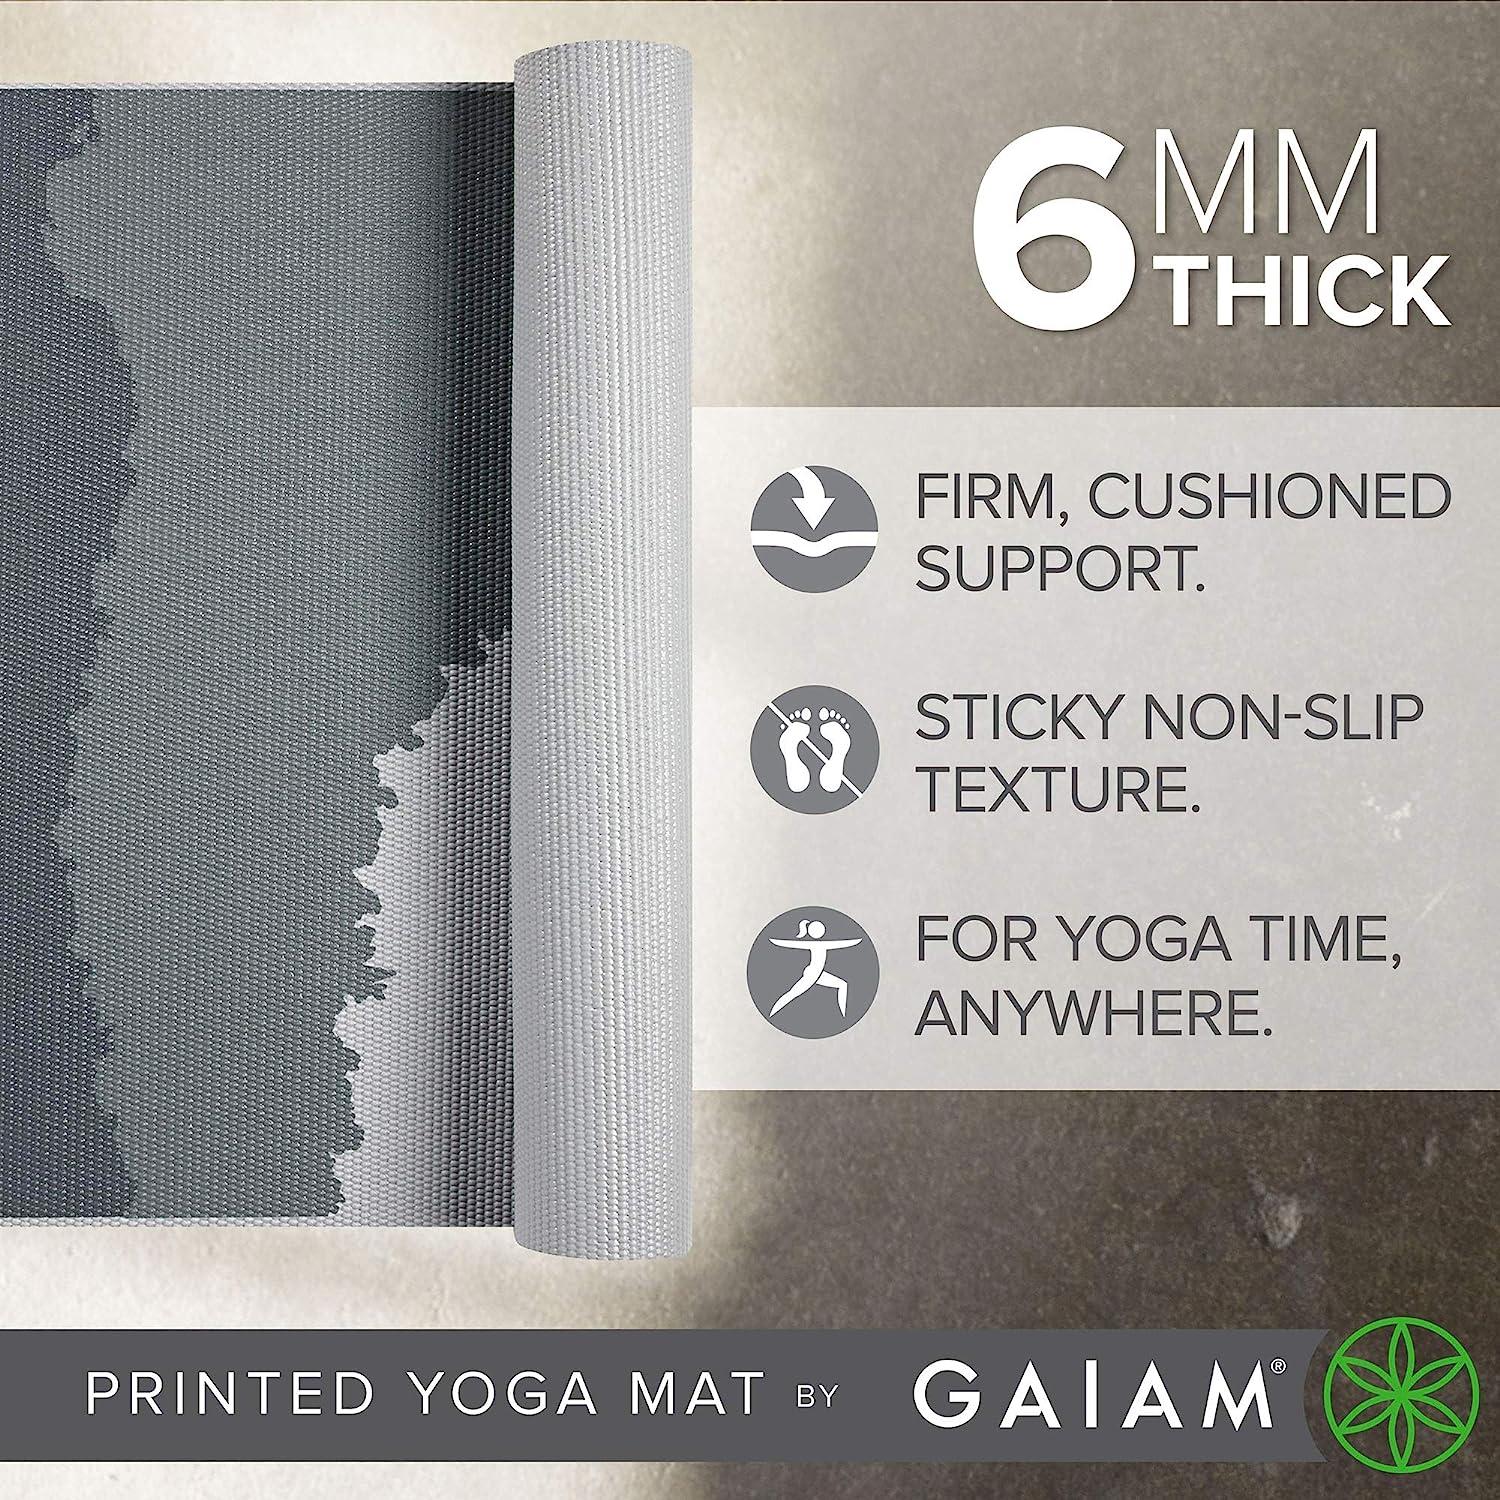 Gaiam Print Yoga Mat, Non Slip Exercise & Fitness Mat for All Types of  Yoga, Pilates & Floor Exercises